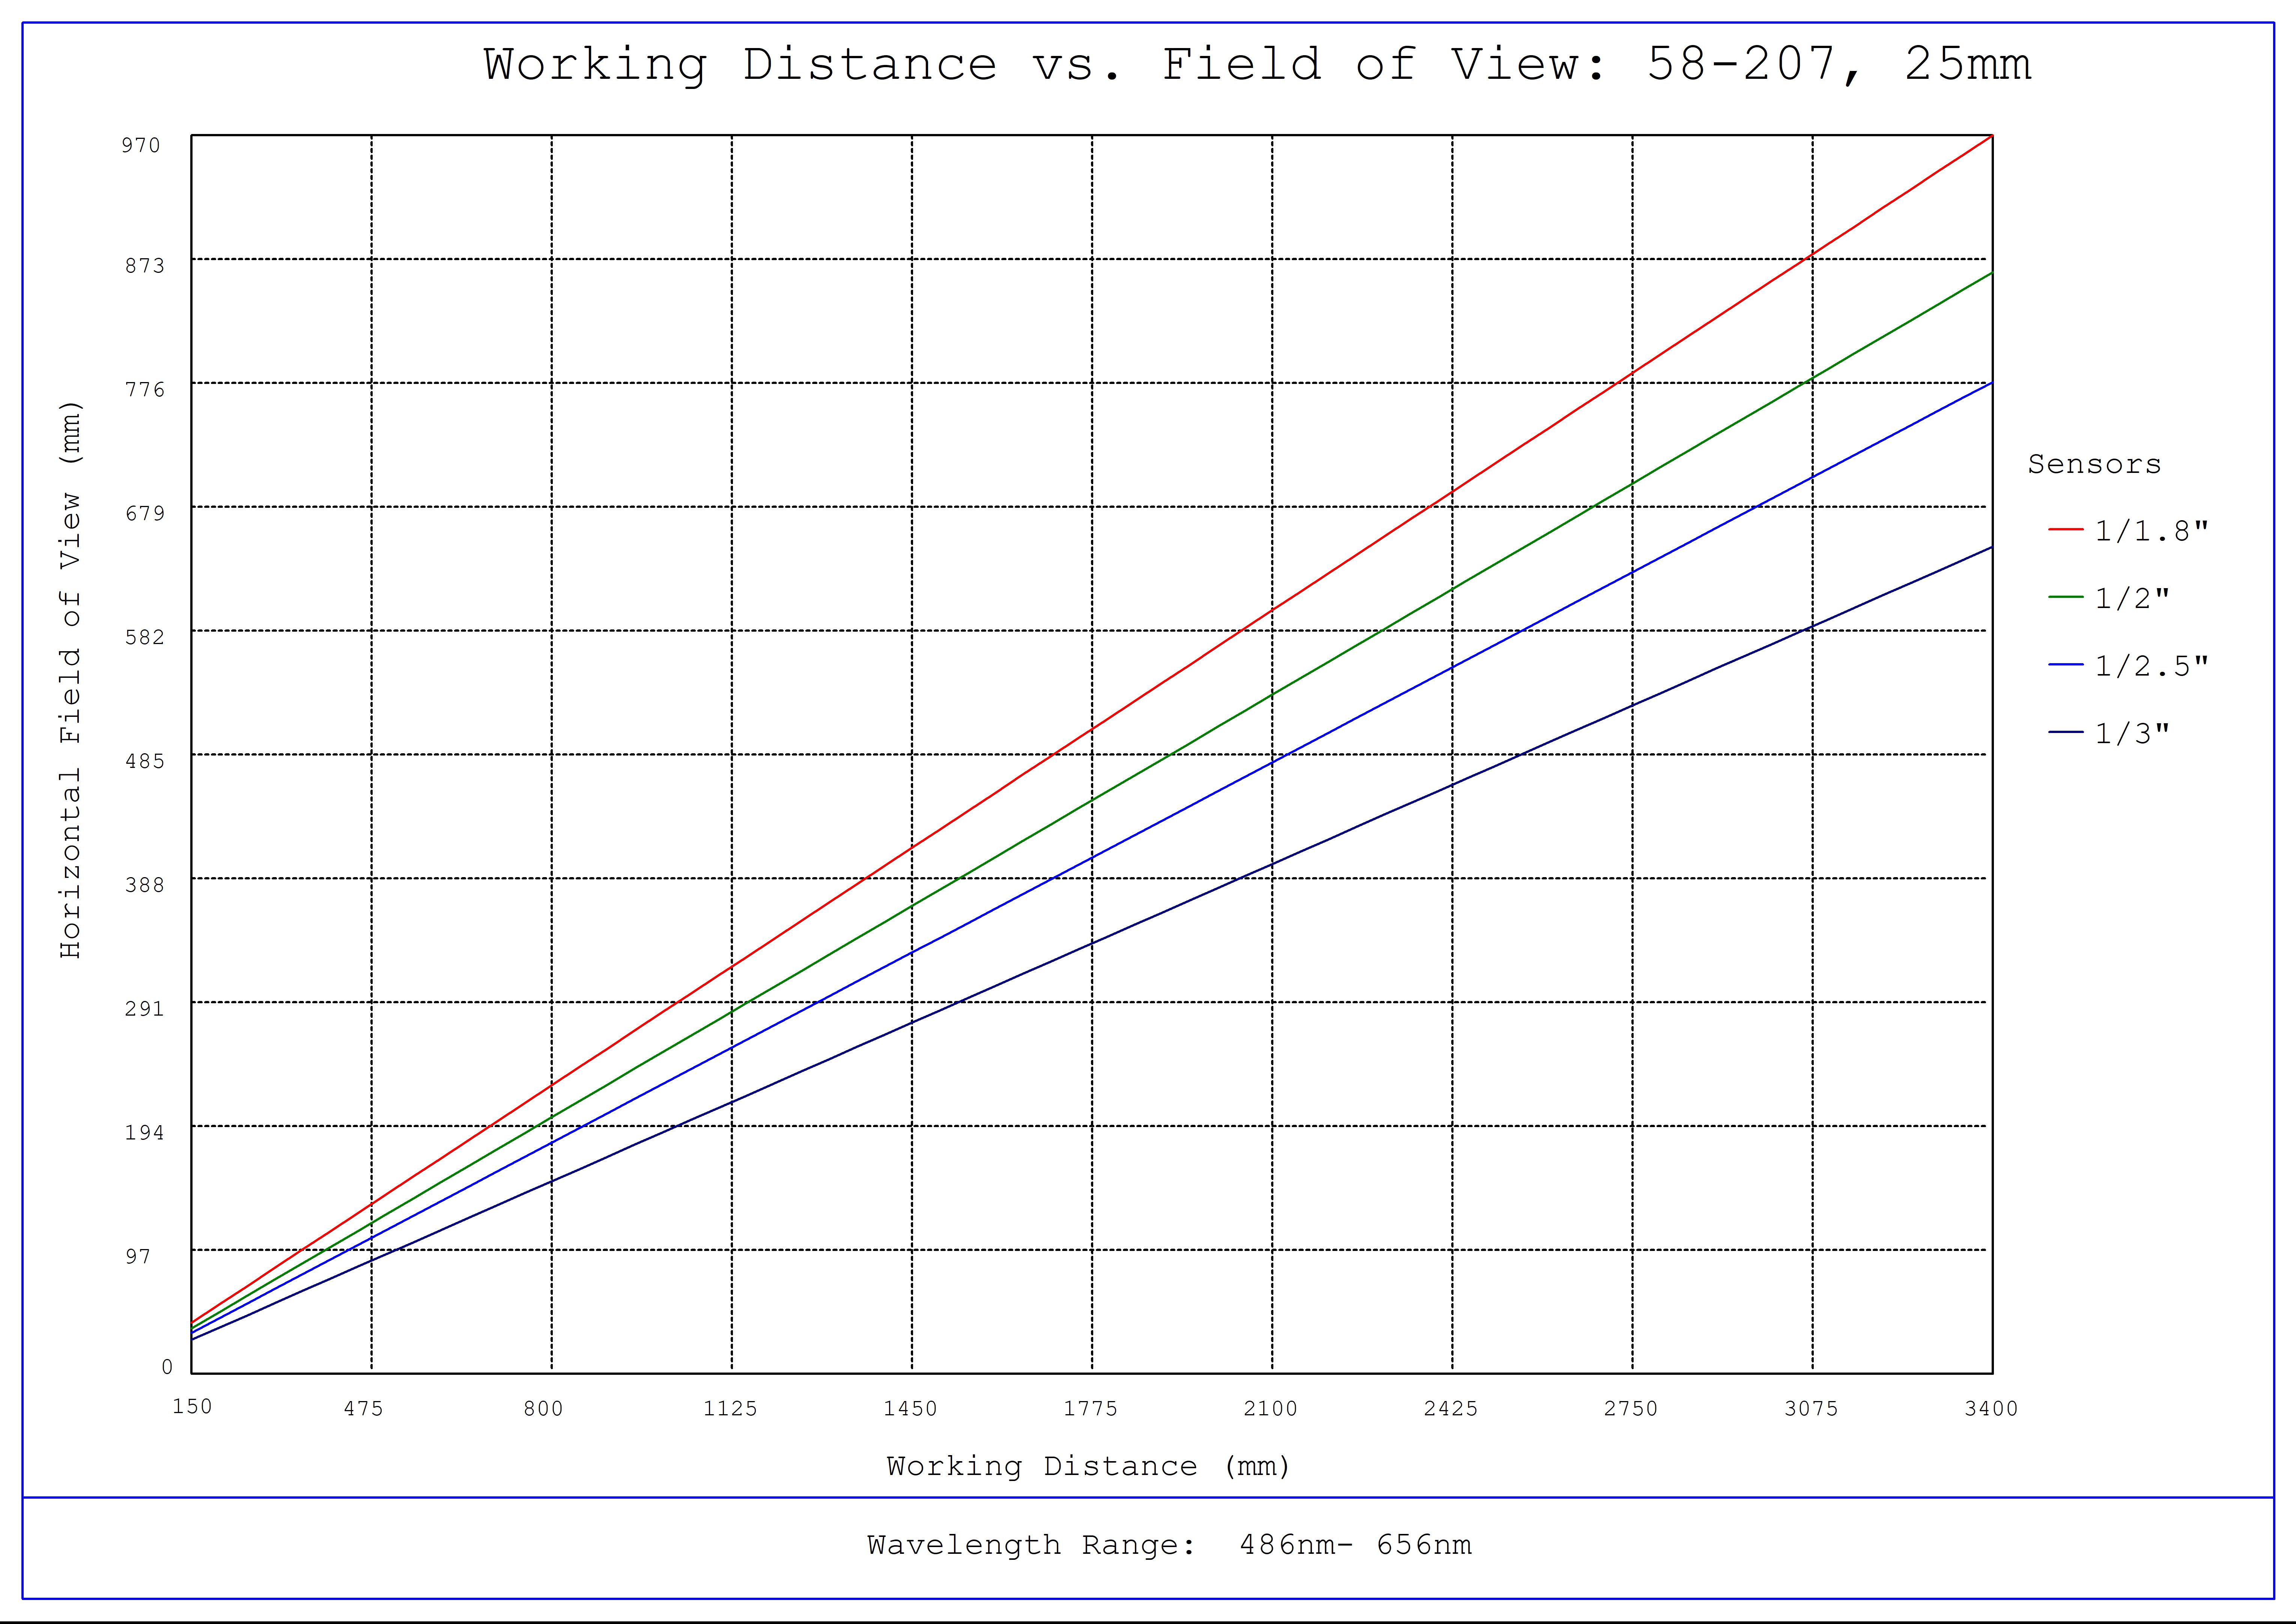 #58-207, 25mm FL f/2.5, Blue Series M12 Lens, Working Distance versus Field of View Plot